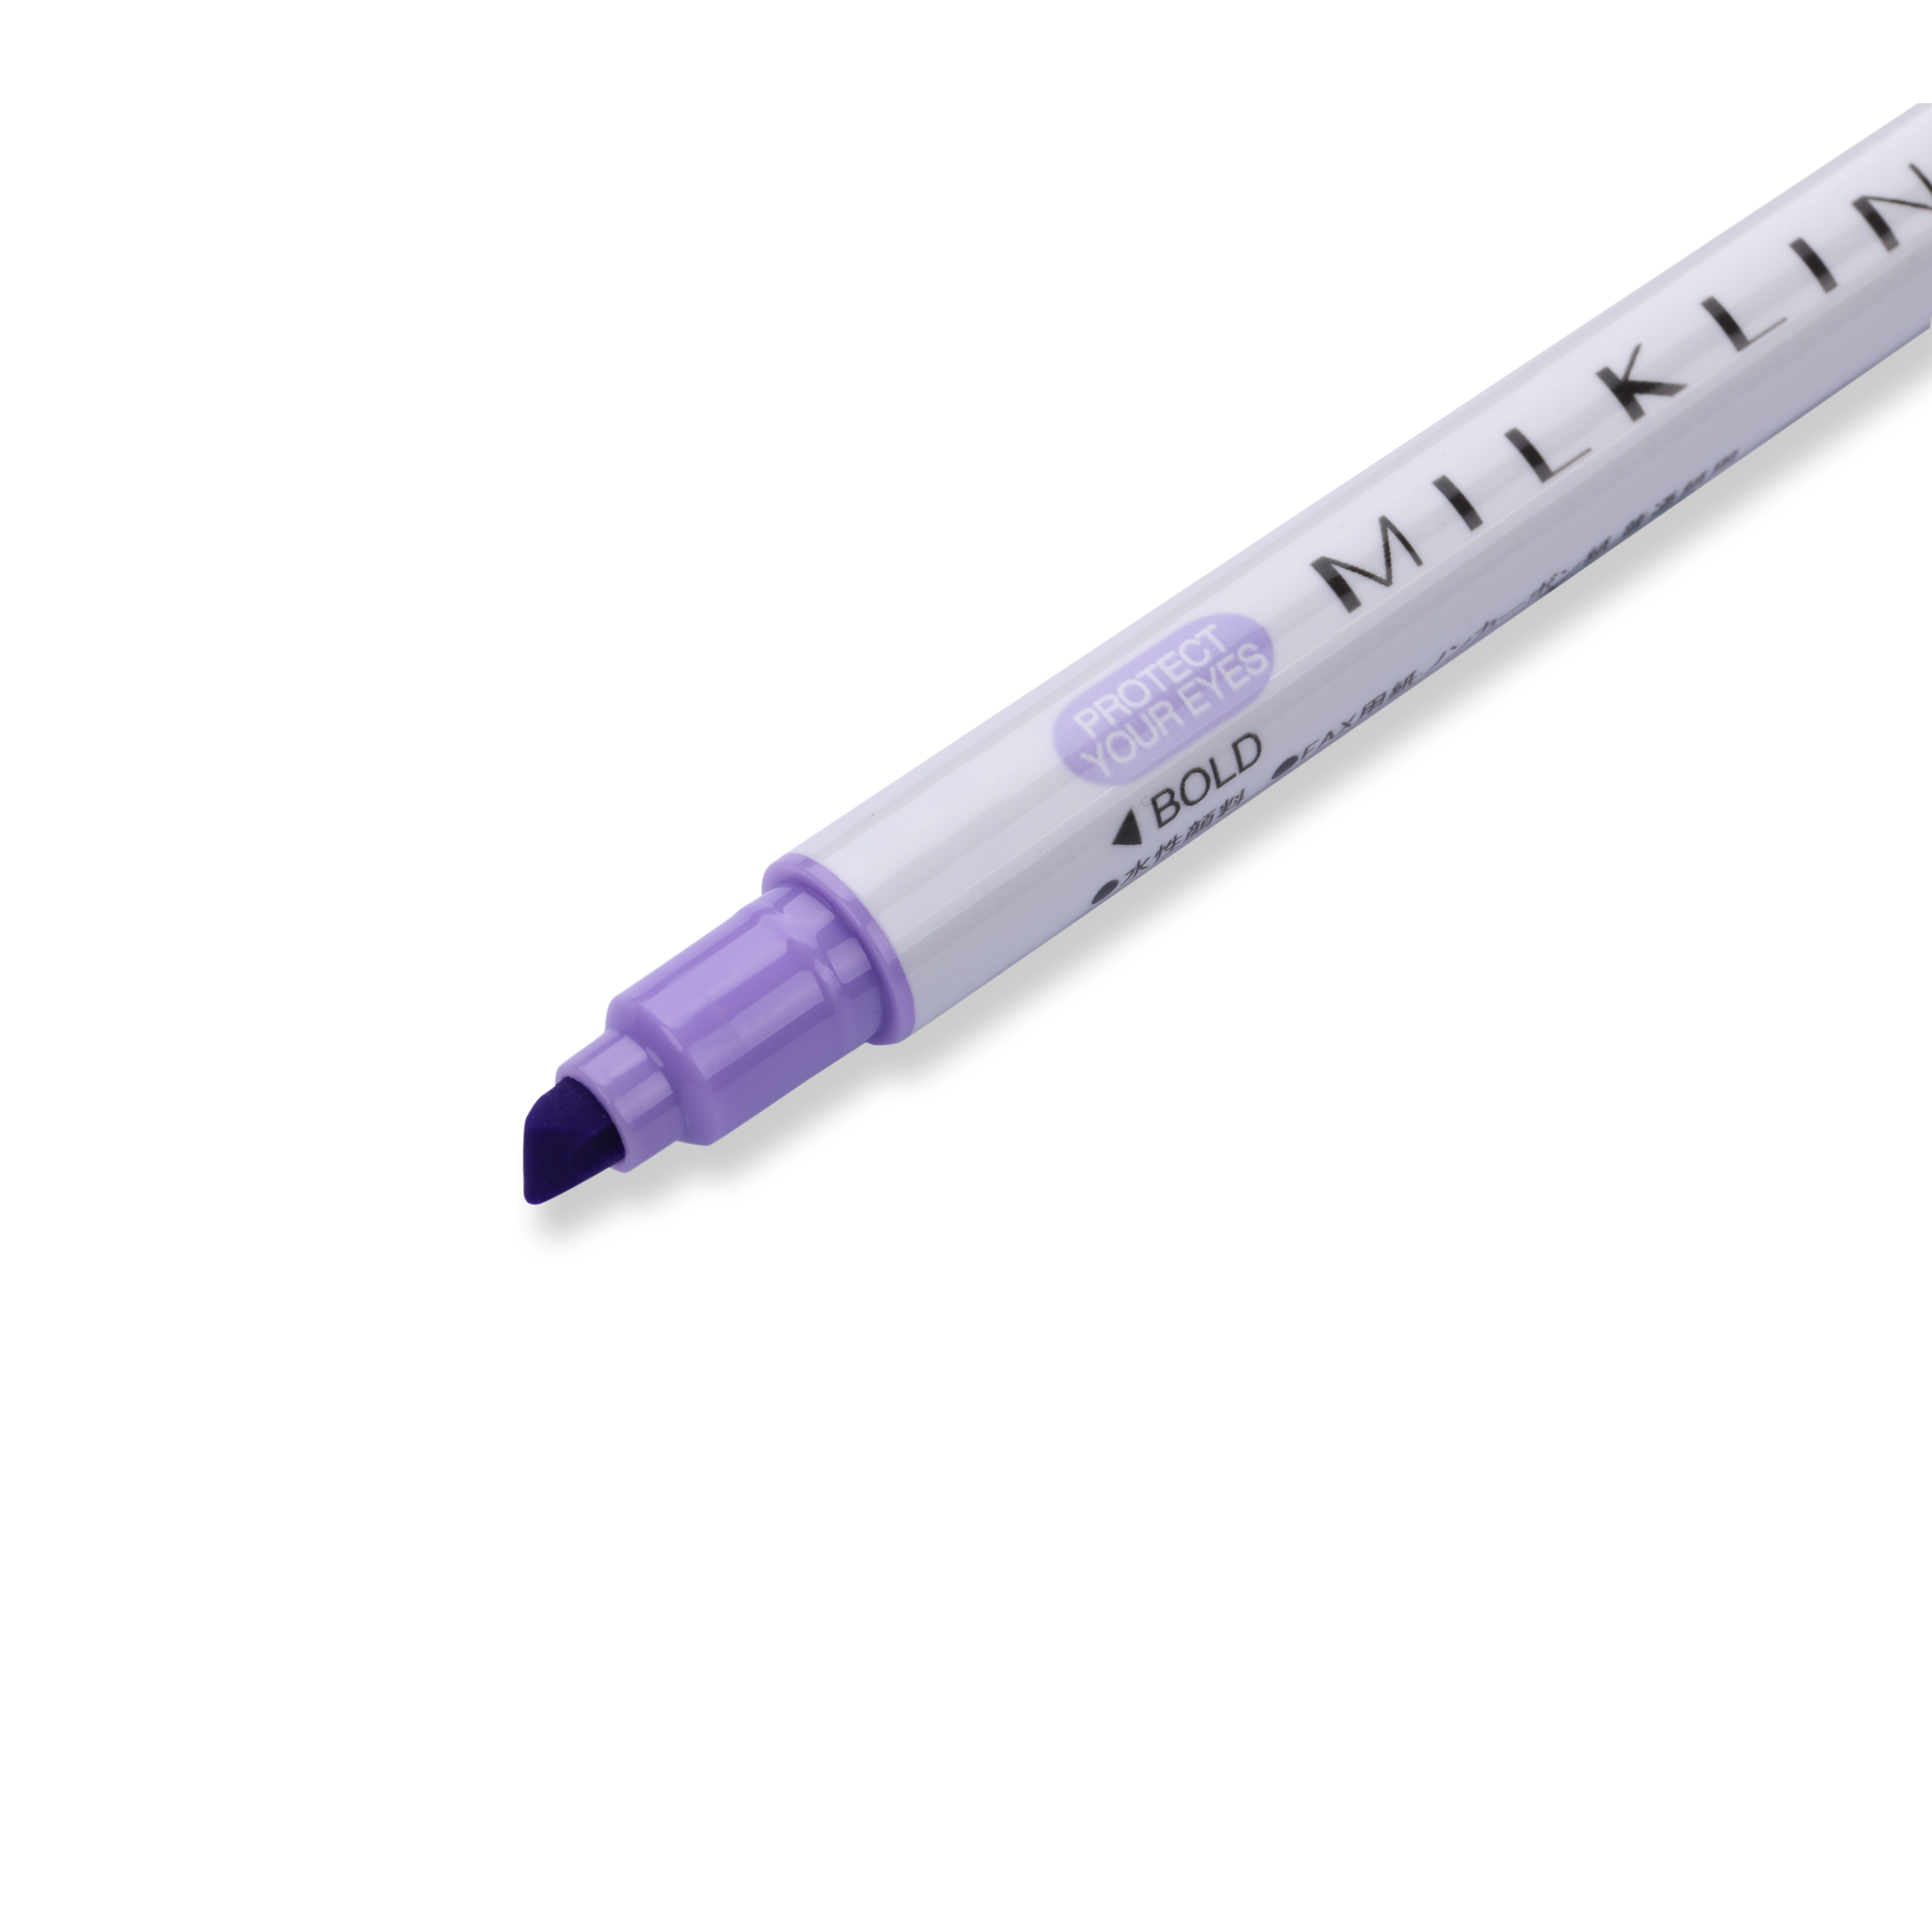 12 PCS/Set Non Bleed Pastel Highlighters Pen Markers | ChildAngle